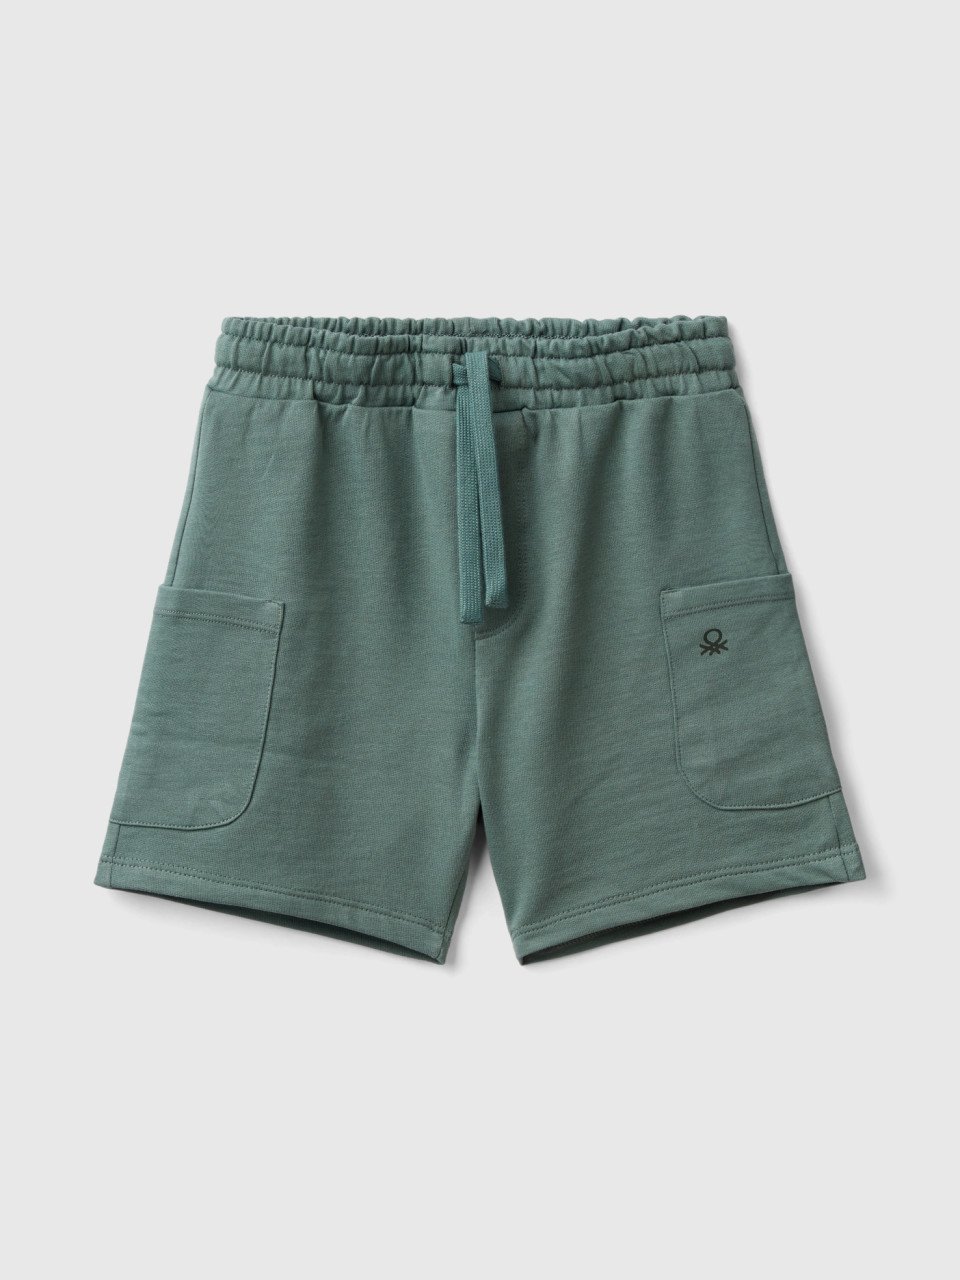 Benetton, Cargo Shorts In Organic Cotton, Military Green, Kids